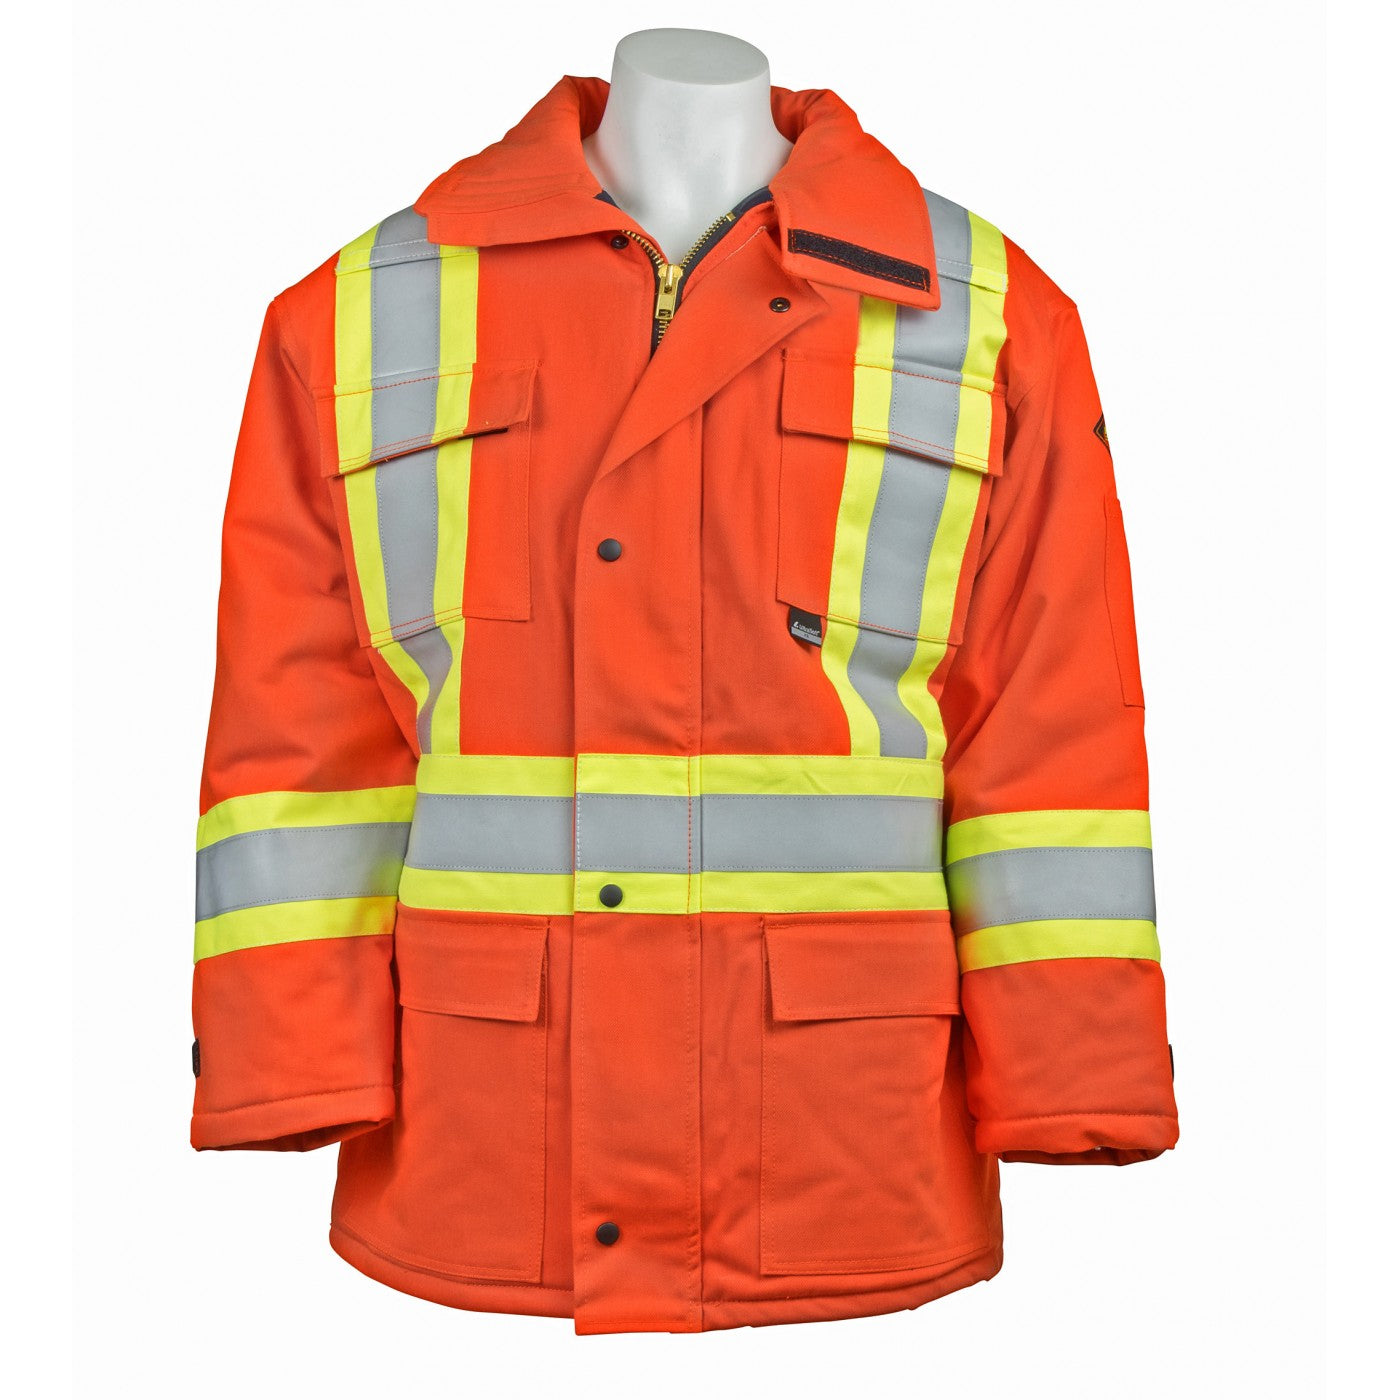 KELTEK 407s Men's Orange CSA Flame Resistant Hi-Vis Safety Parka | S-4XL (HRC 4)